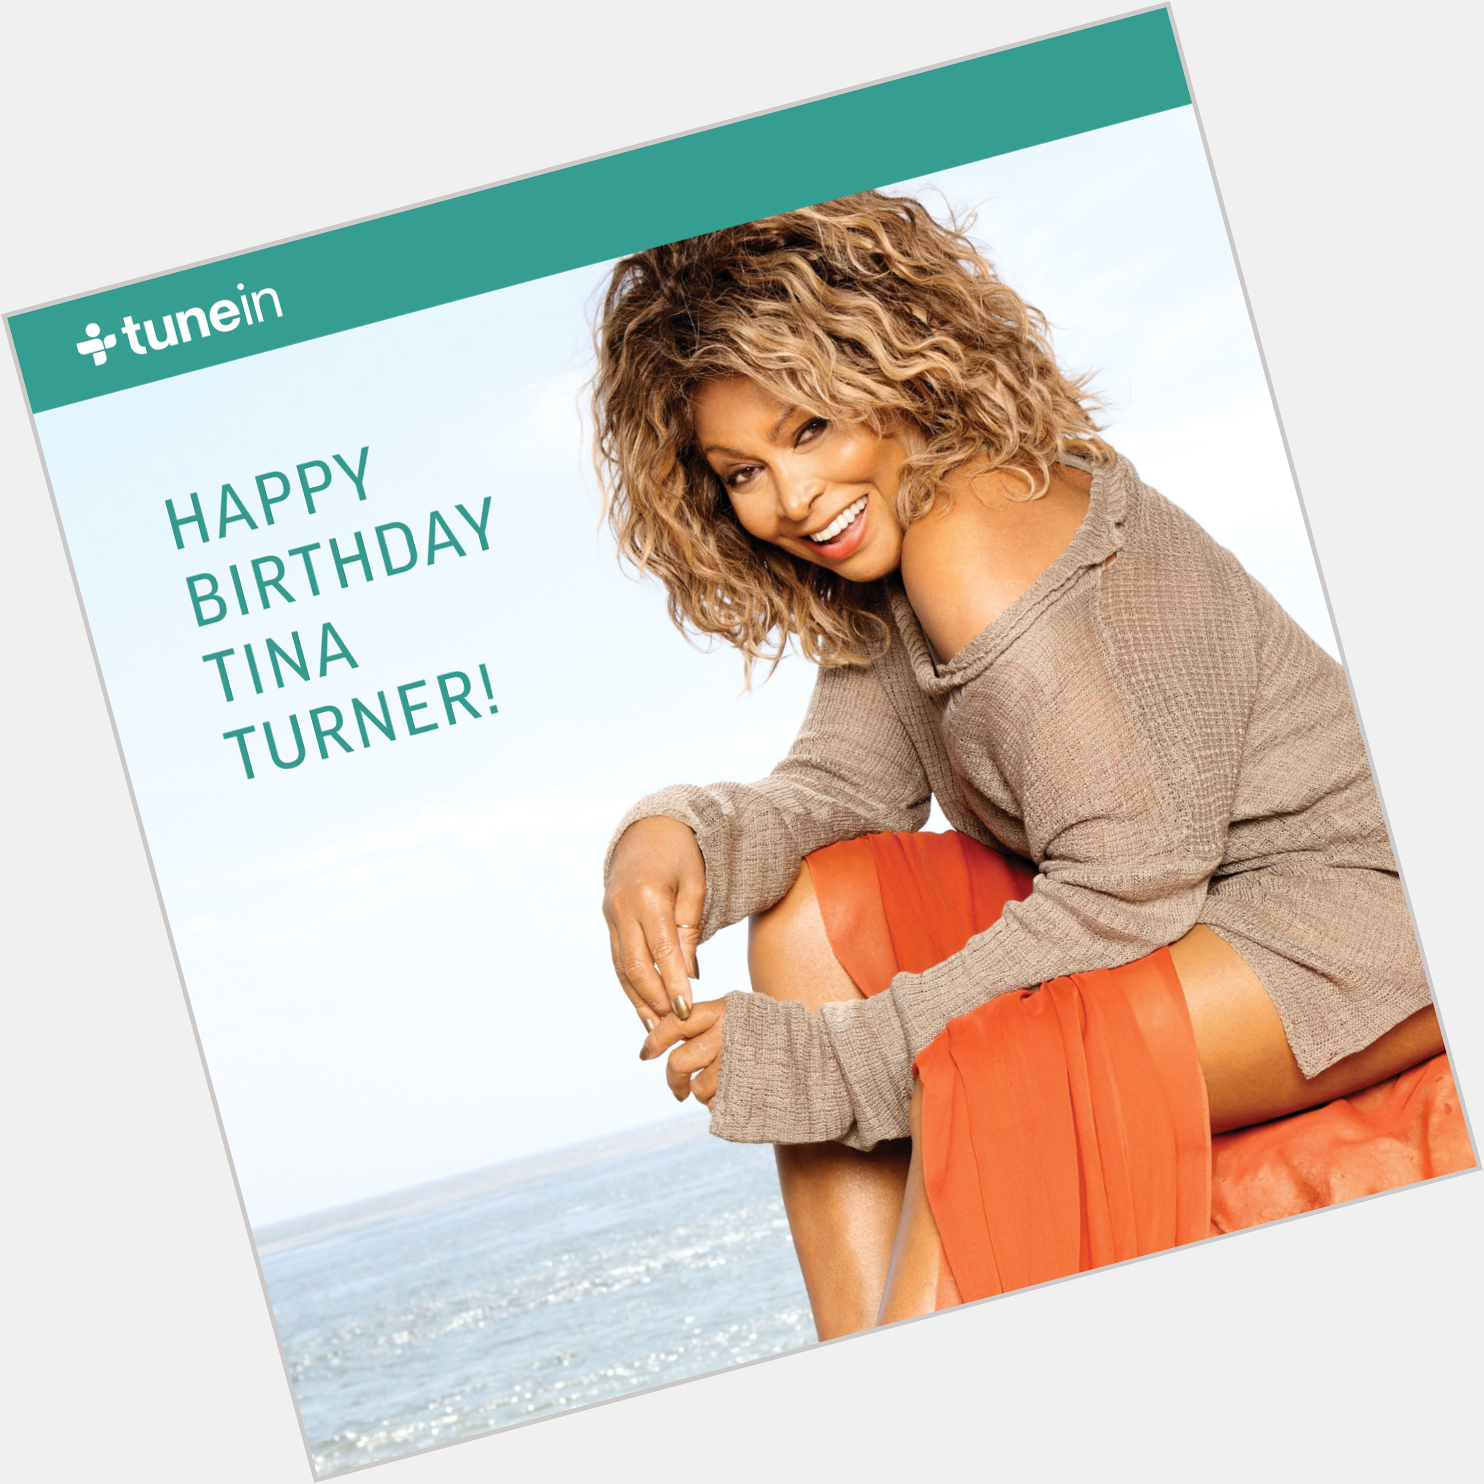 Happy 75th birthday to the fabulous Tina Turner!

Listen to the Grammy Award-winning artist:  